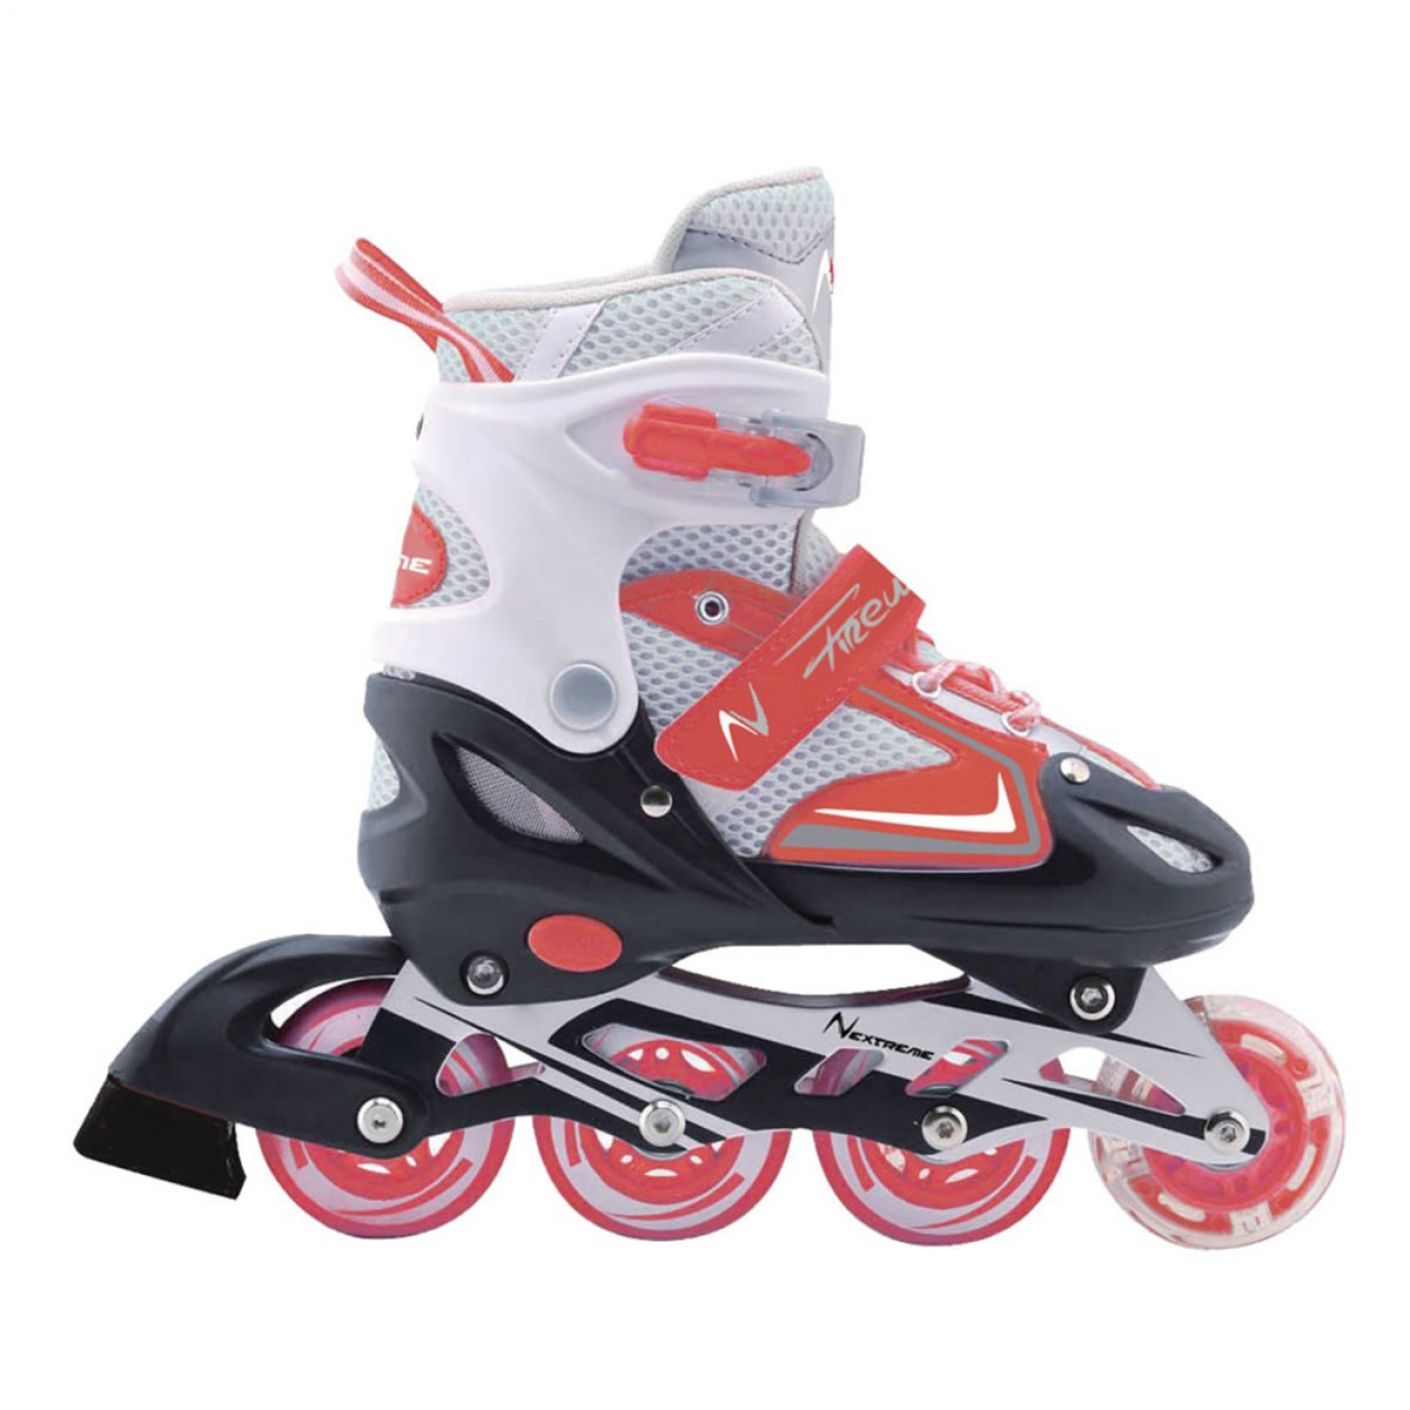 Garlando Firewheel rote Inline-Skates